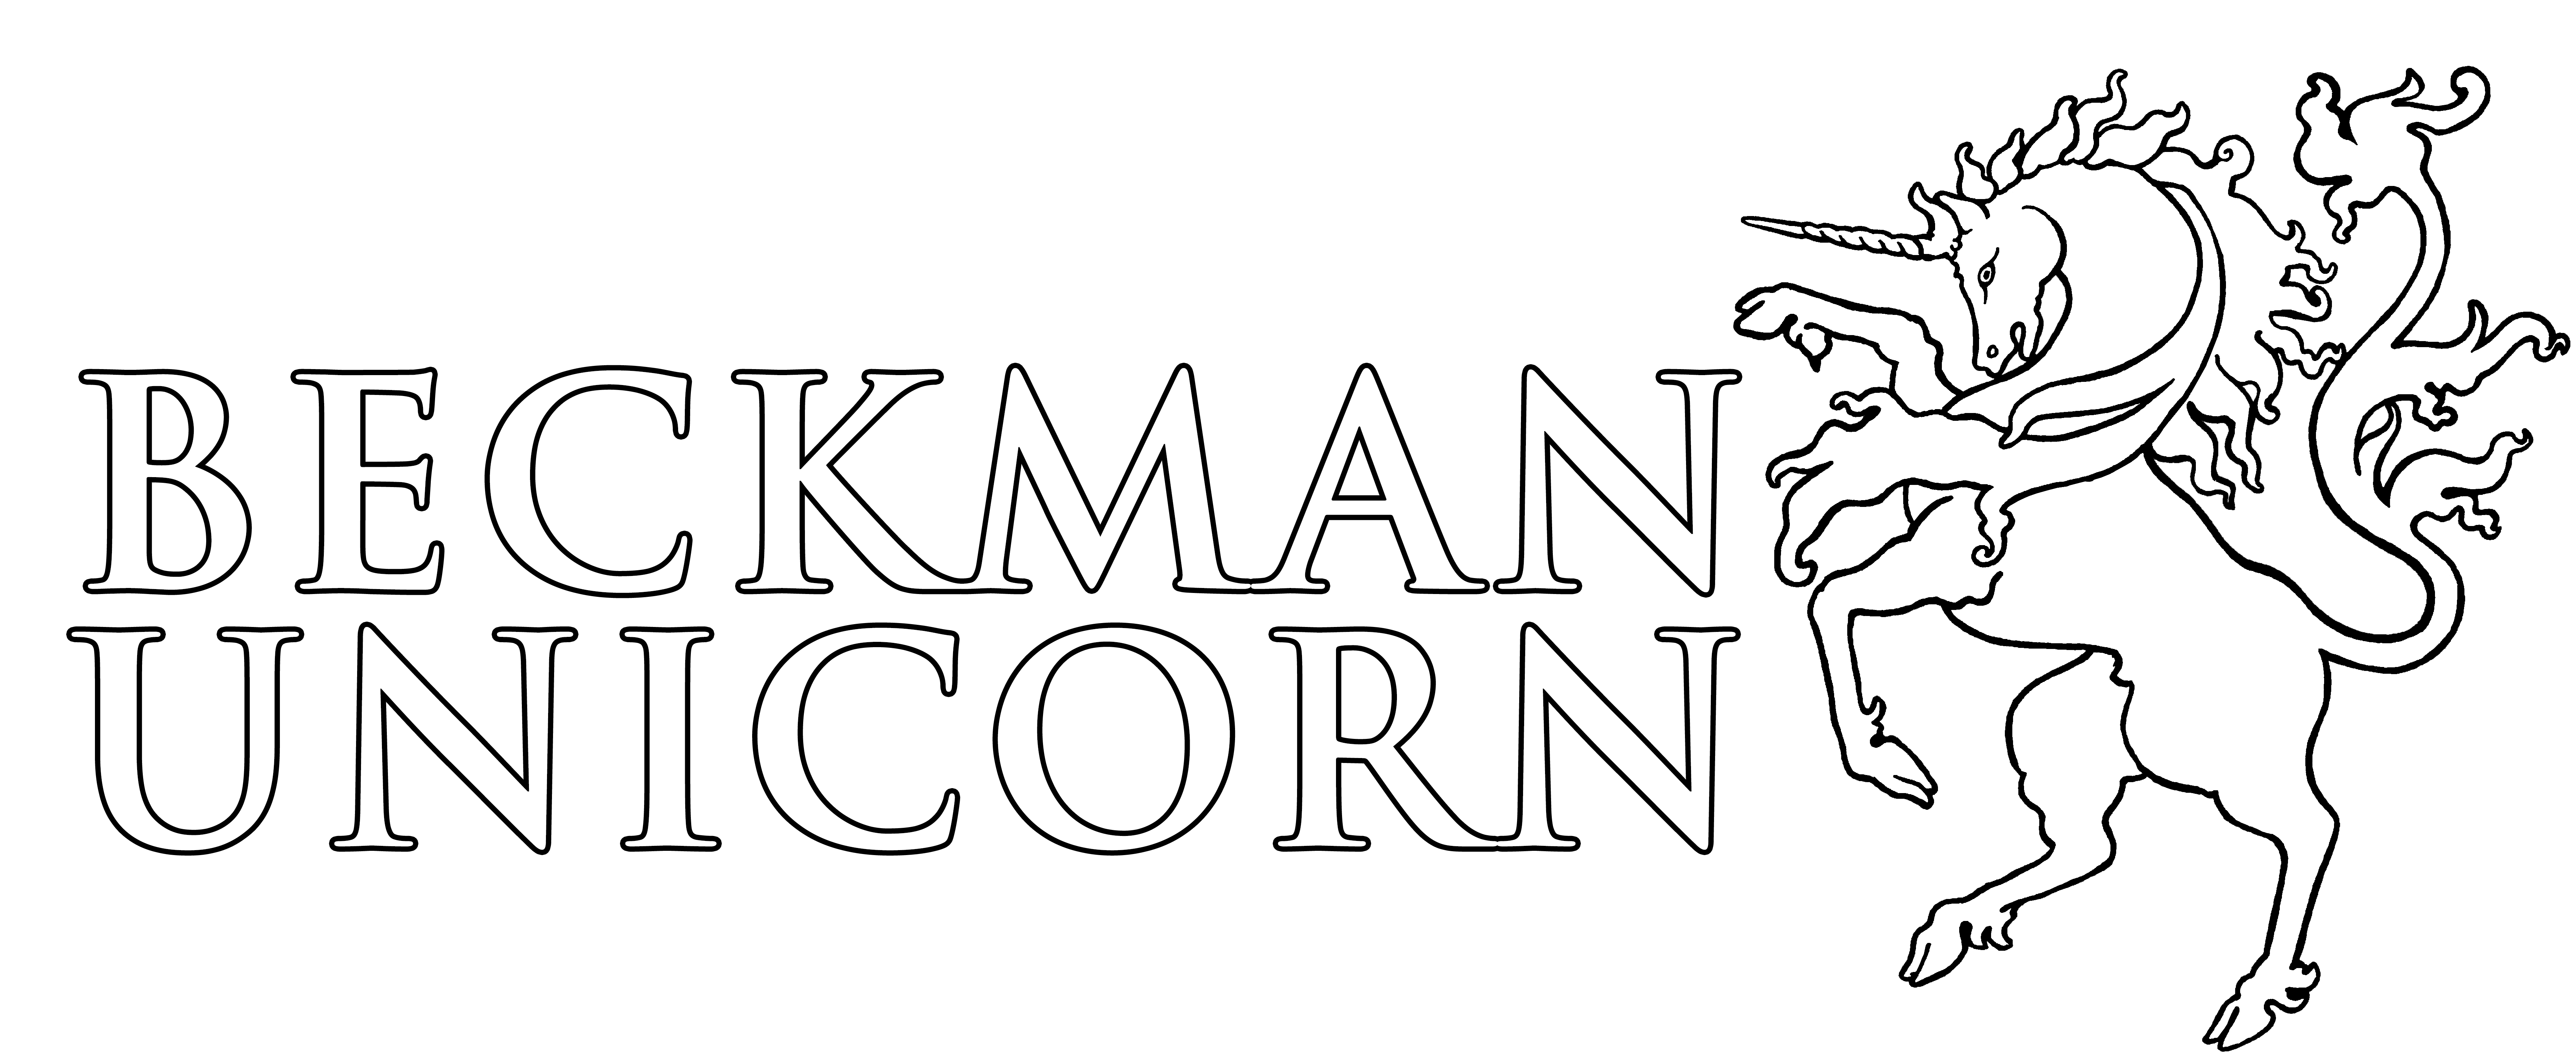 Beckman Unicorn Logo